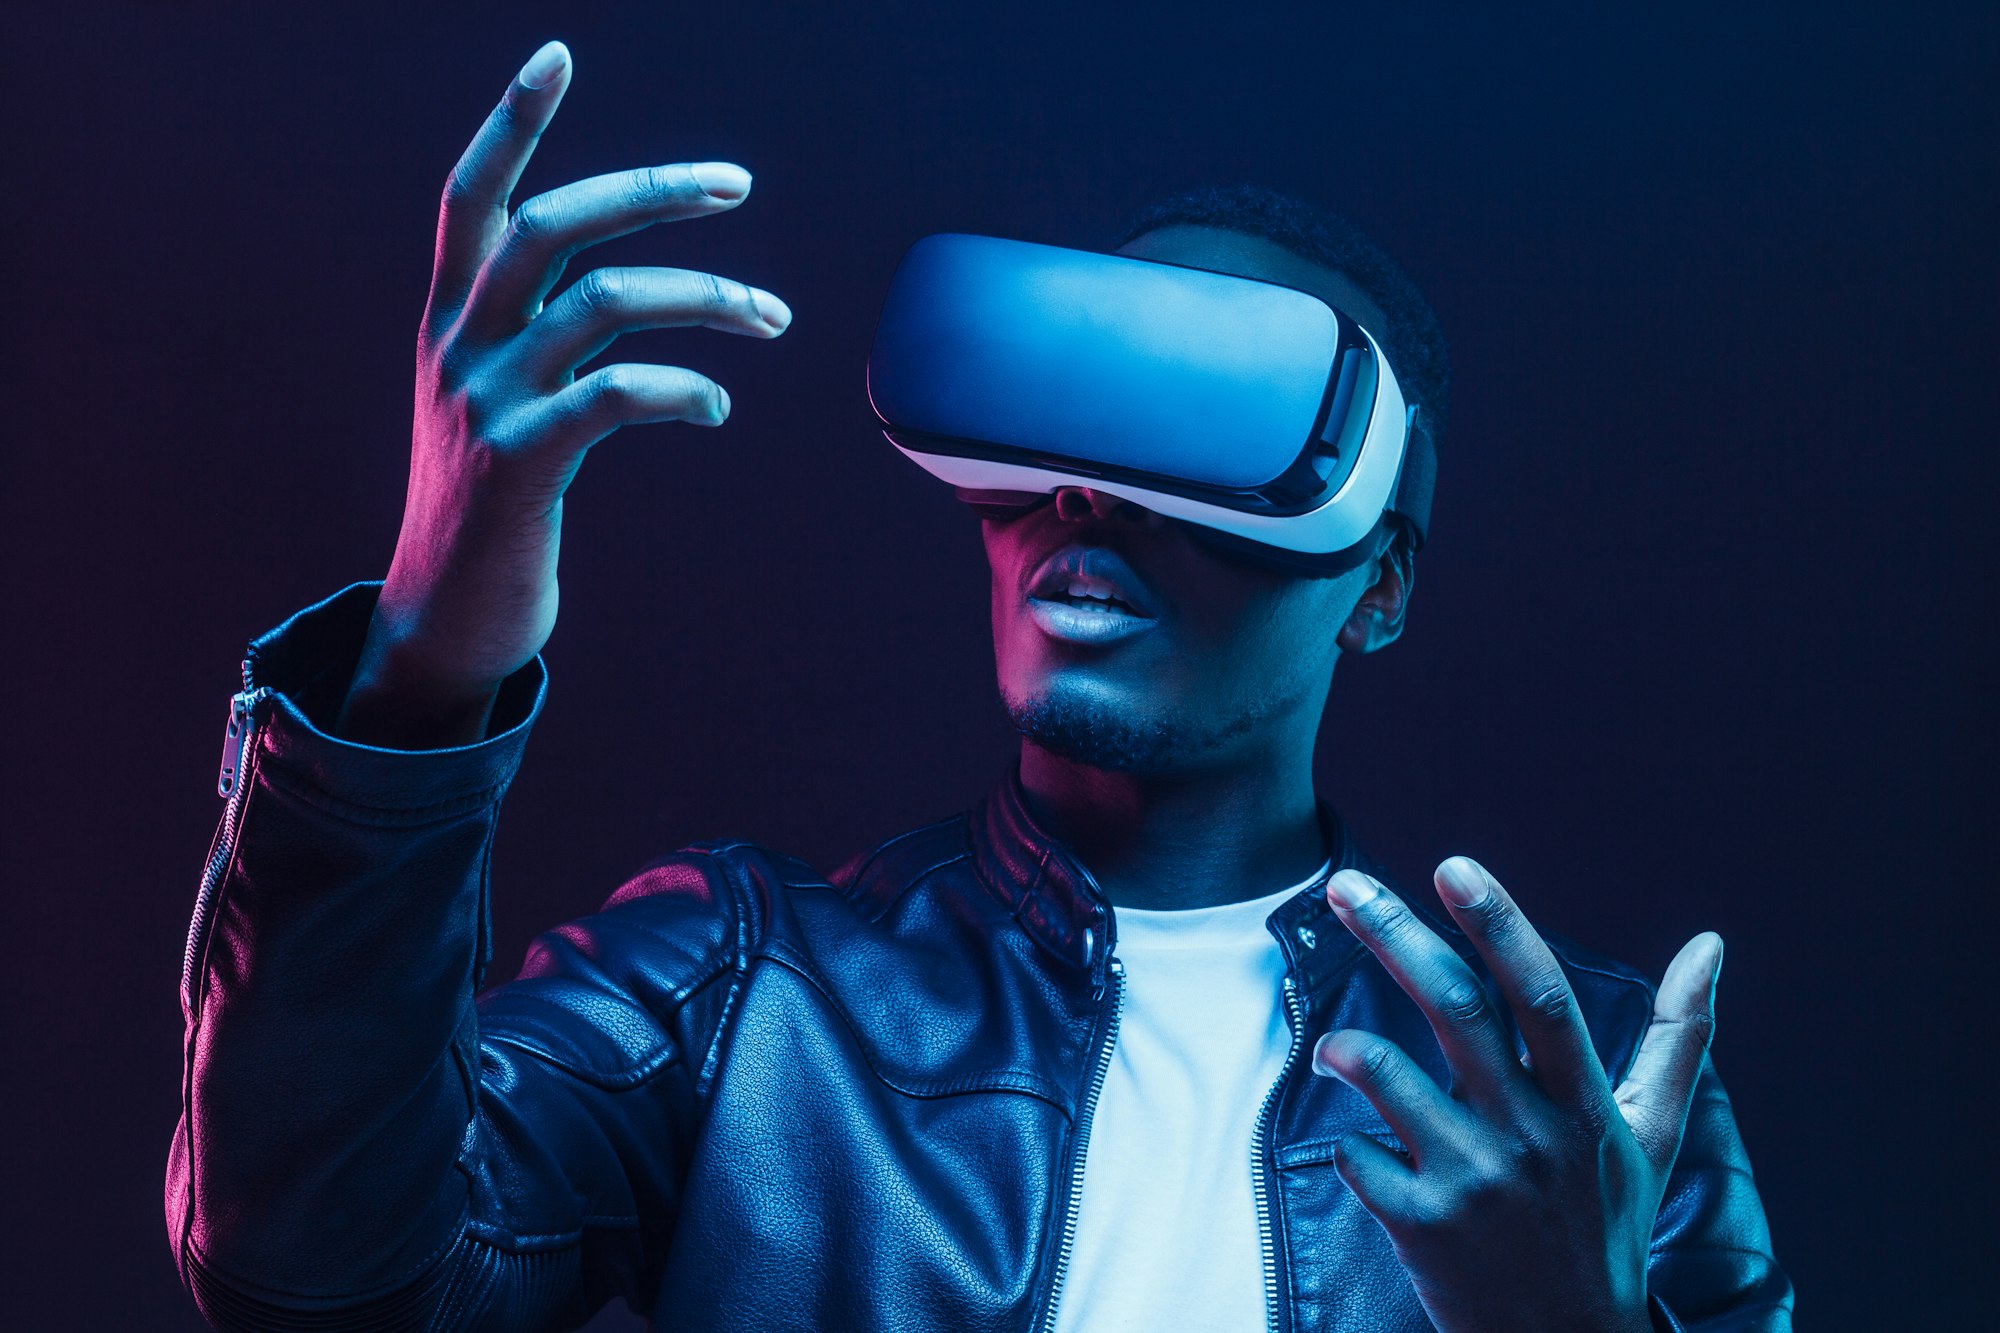 African man wearing virtual reality headset